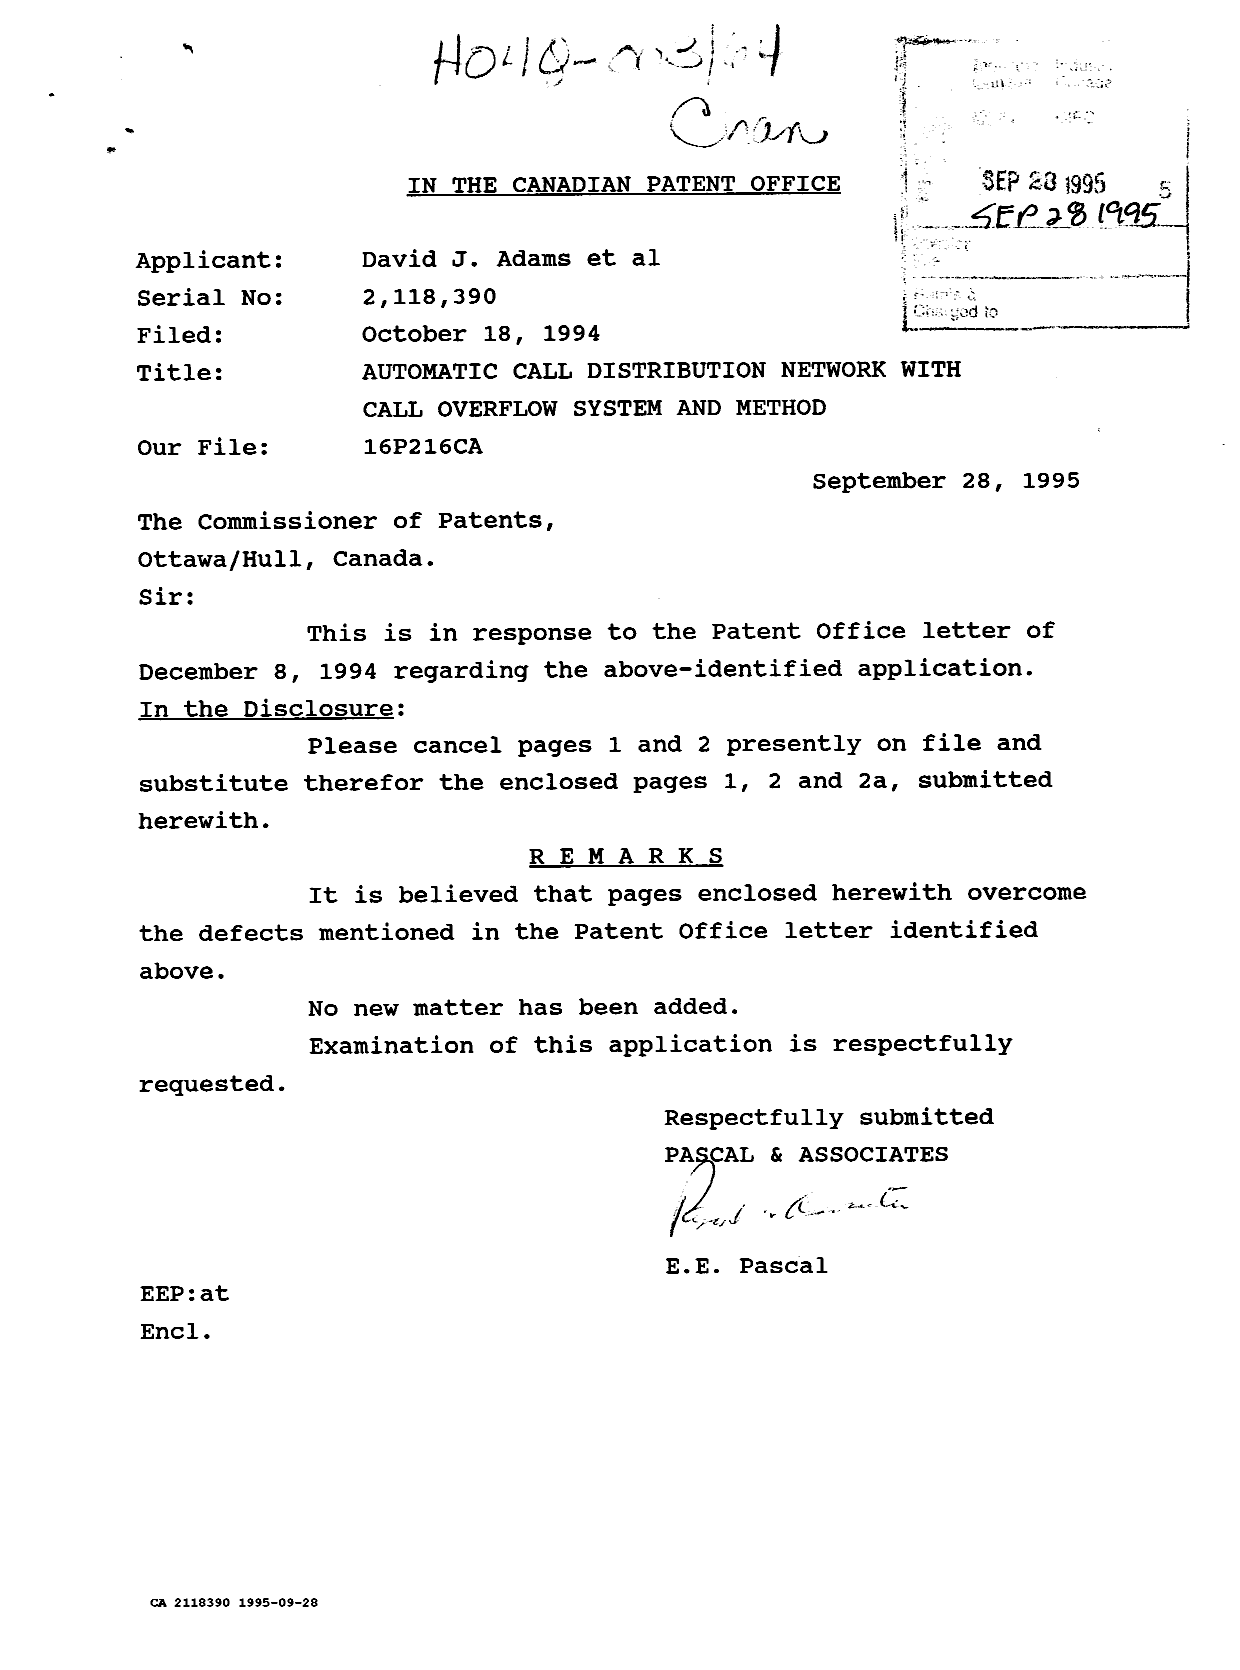 Canadian Patent Document 2118390. Prosecution Correspondence 19950928. Image 1 of 1